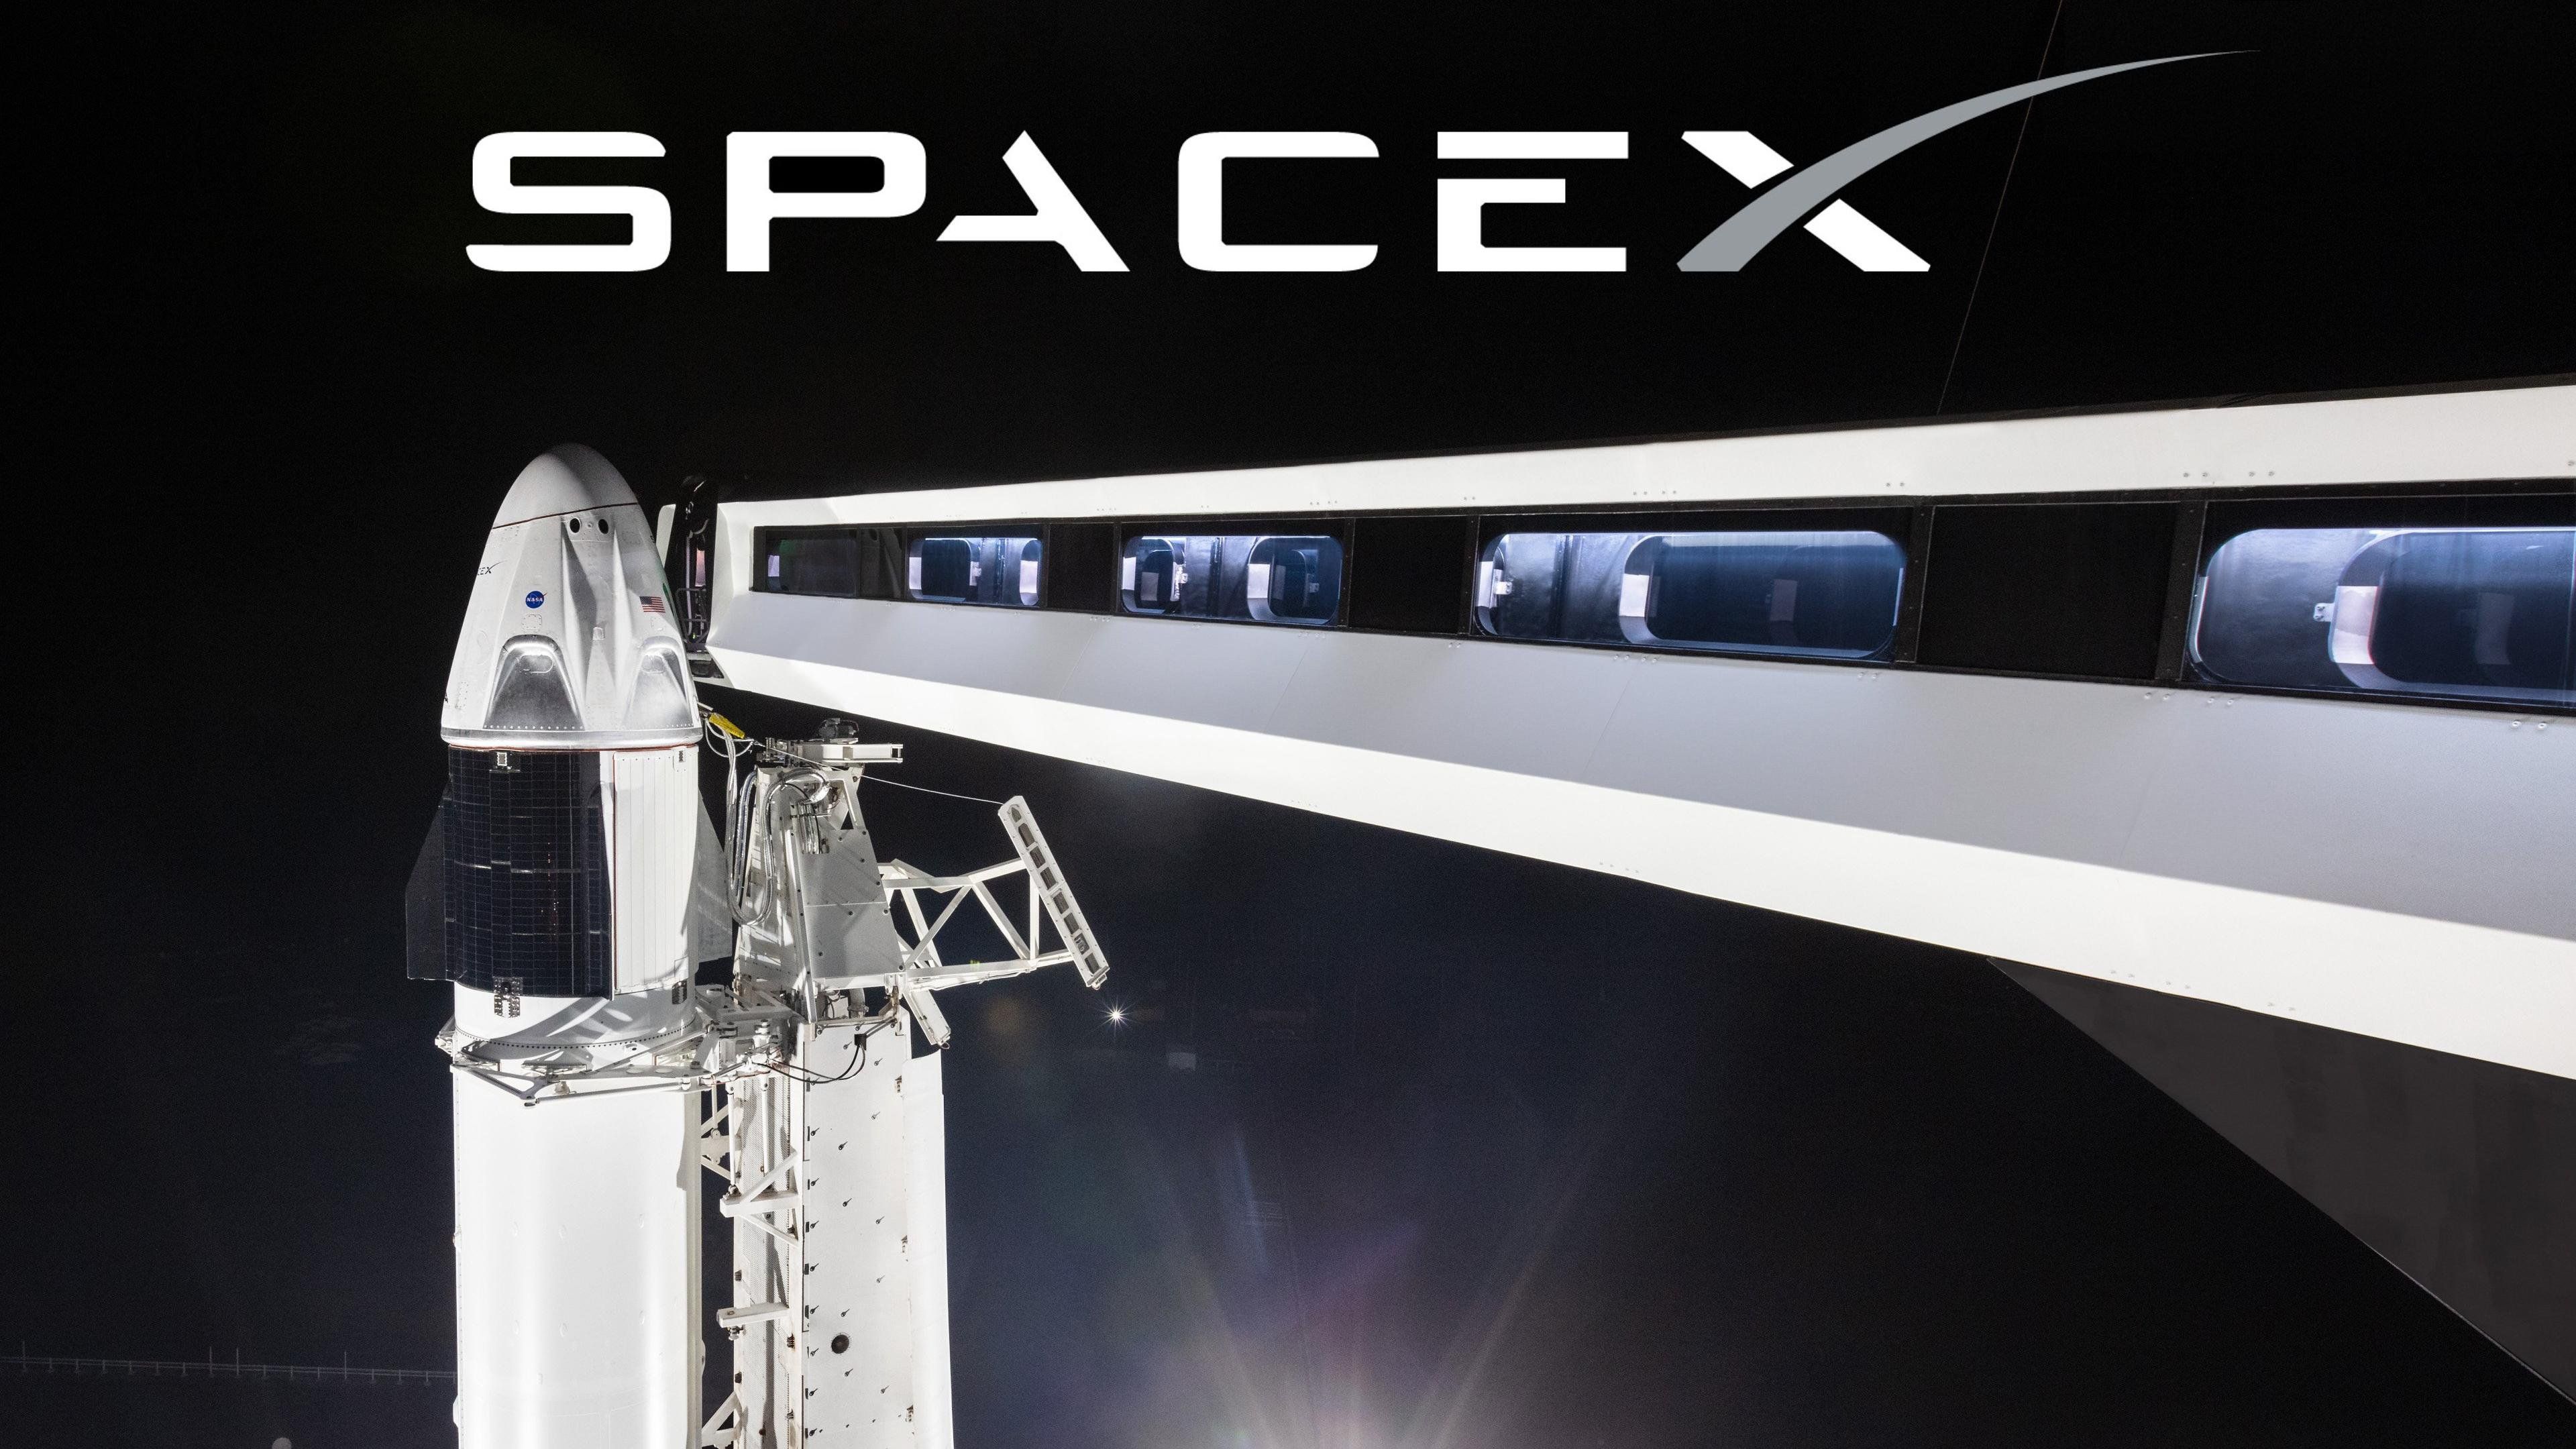 SpaceX Wallpaper (3840 x 2160)